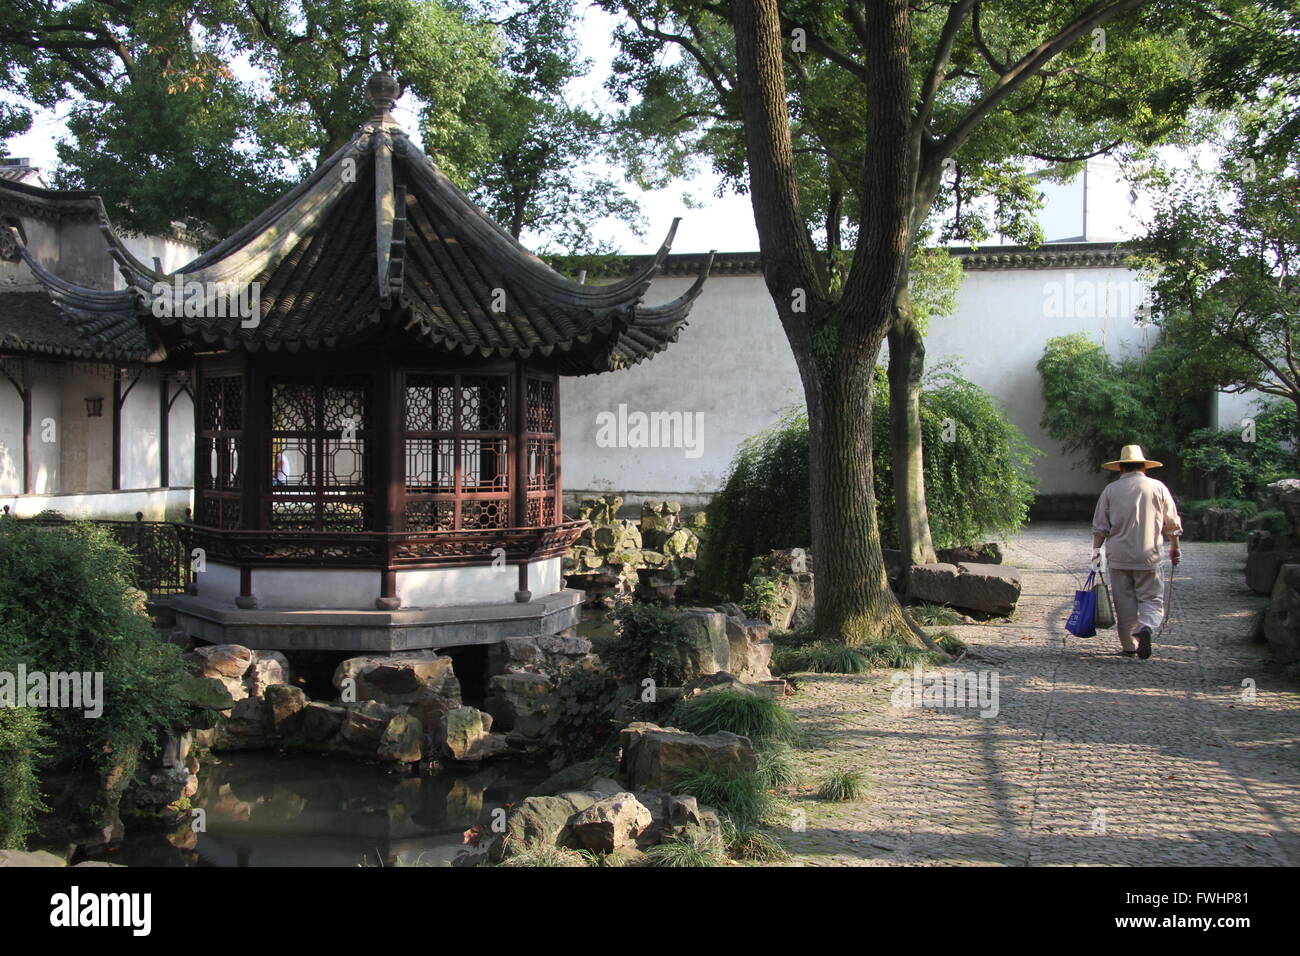 L'Humble Administrator's Garden, Suzhou, province de Jiangsu, Chine Banque D'Images